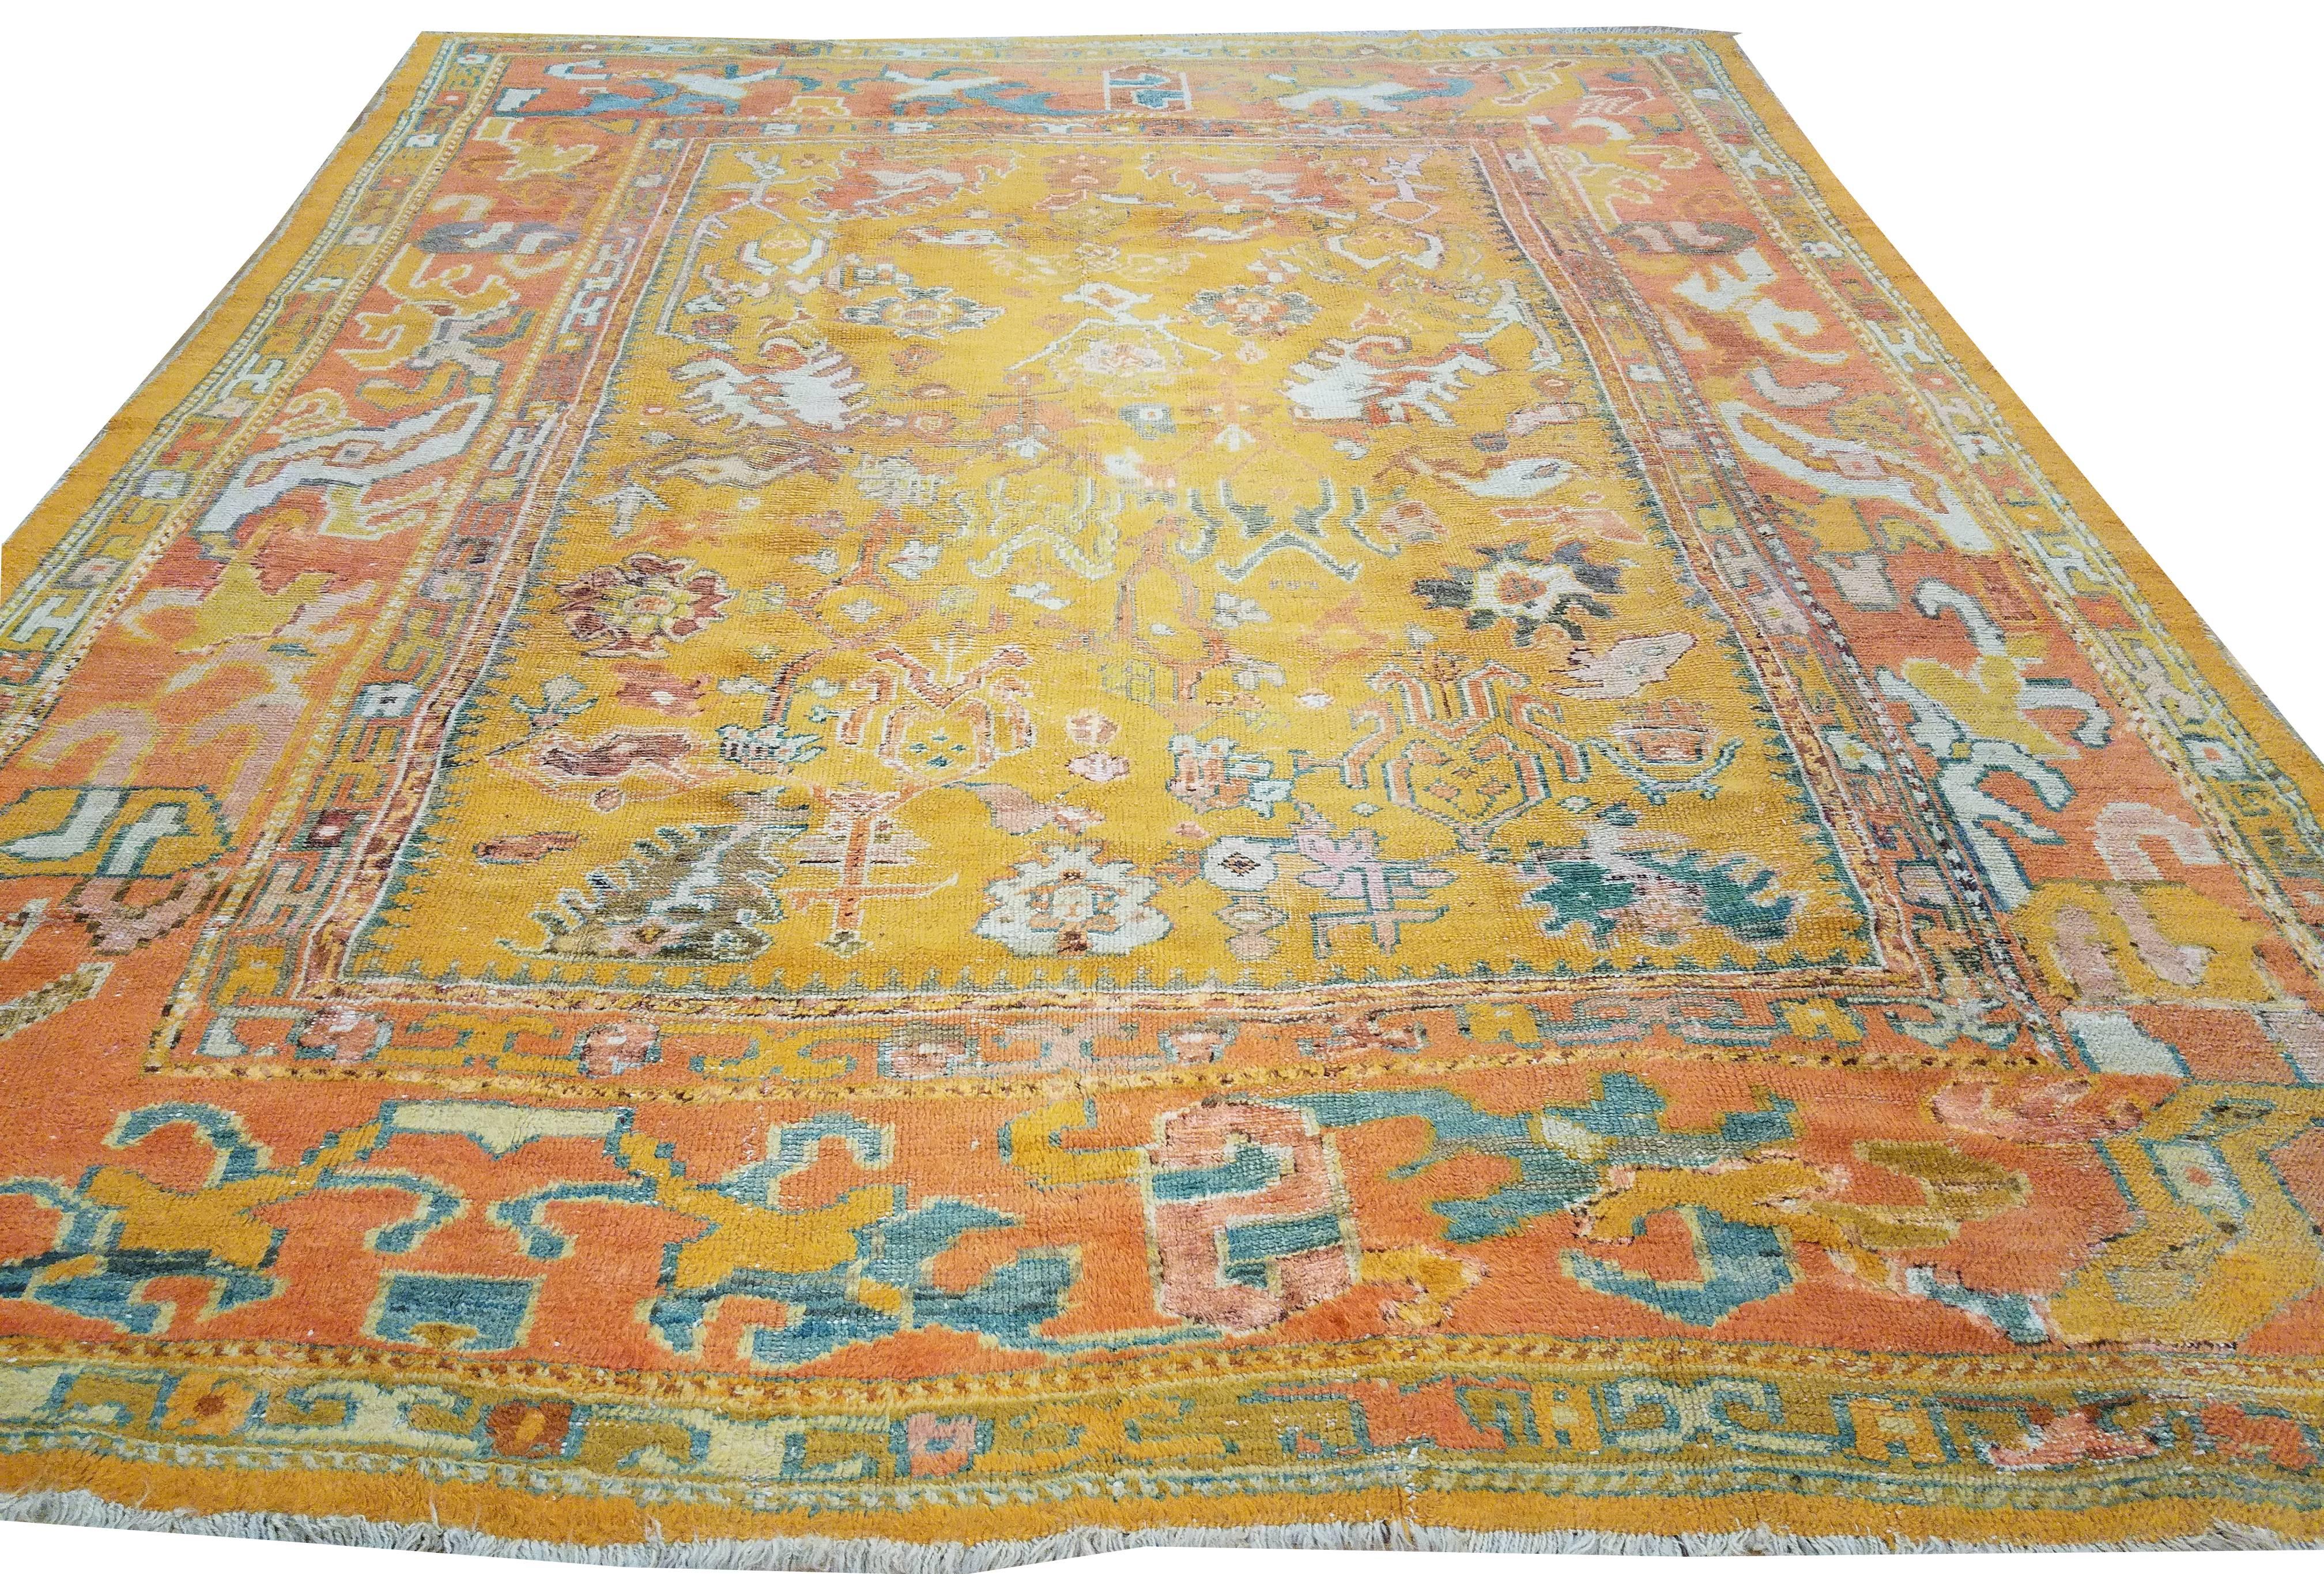 19th Century Antique Oushak Carpet, Oriental Rug, Handmade Orange, Ivory and Saffron